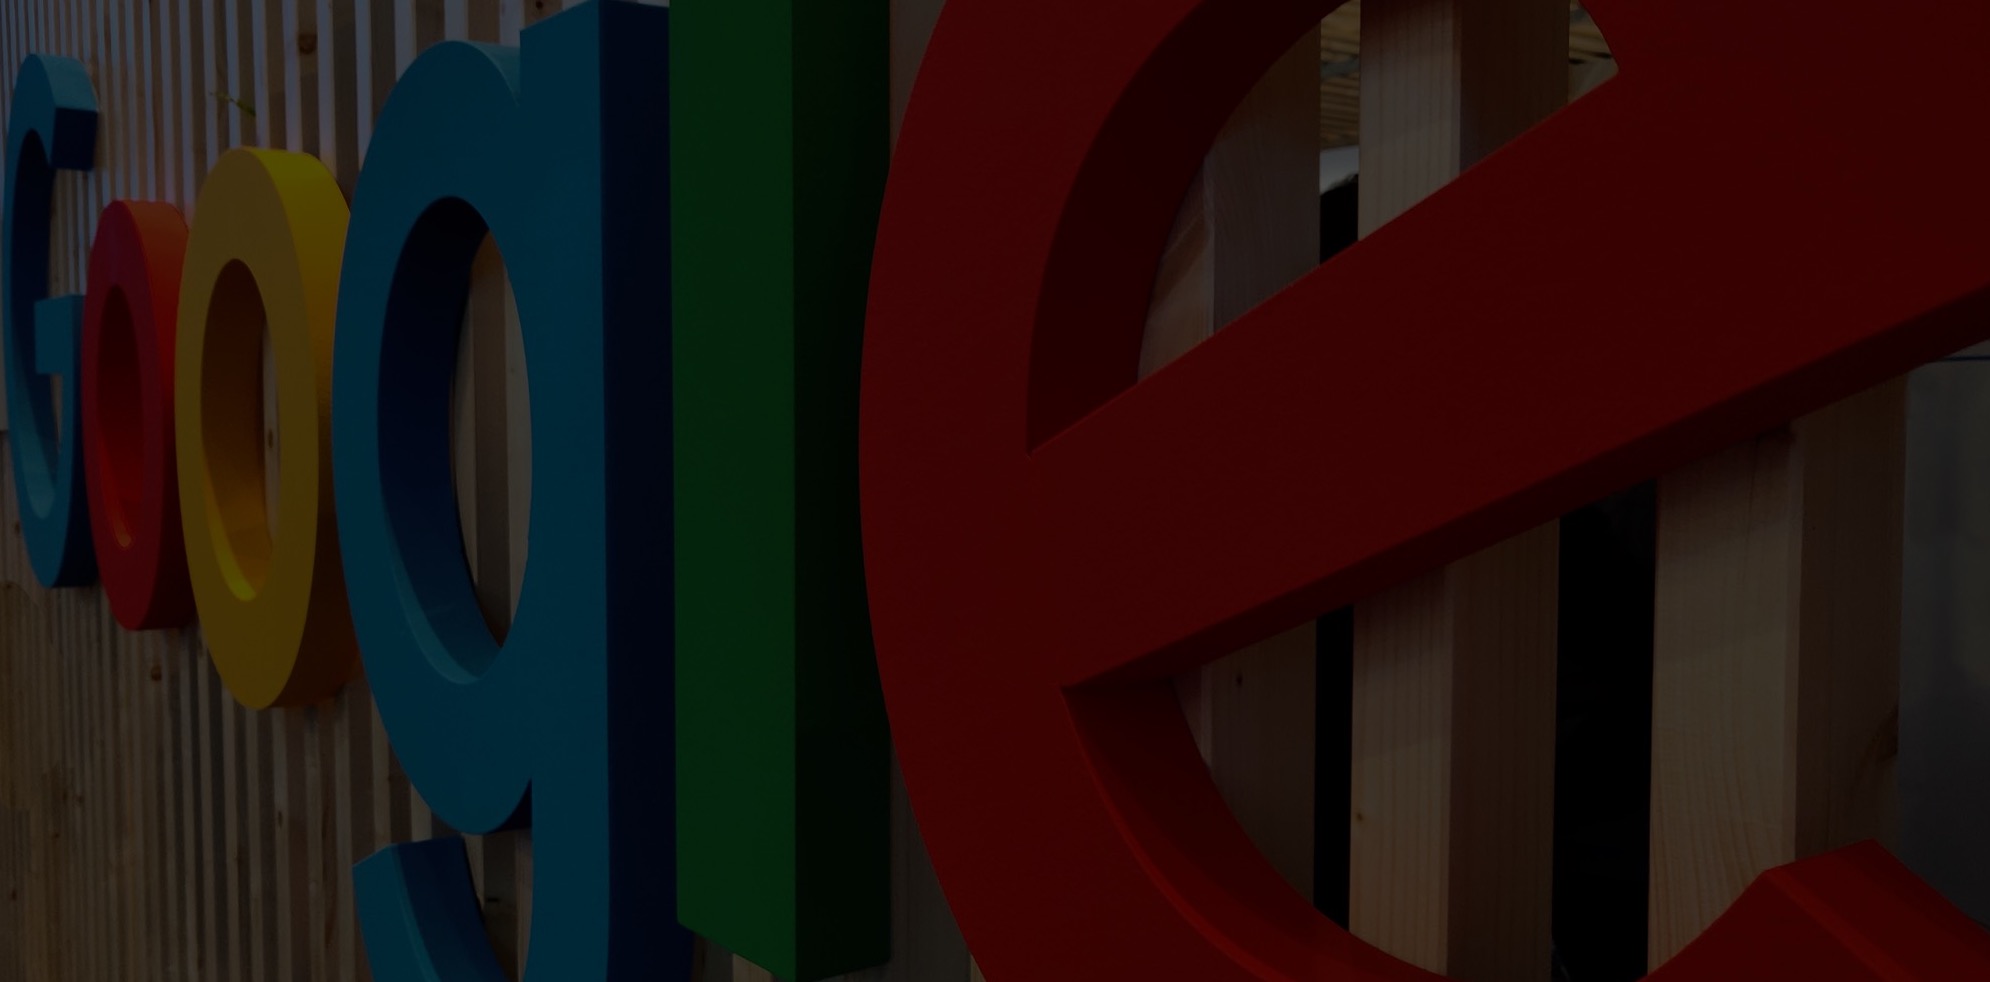 Sundar Pichai Left his position at Google-New CEO of Alphabet